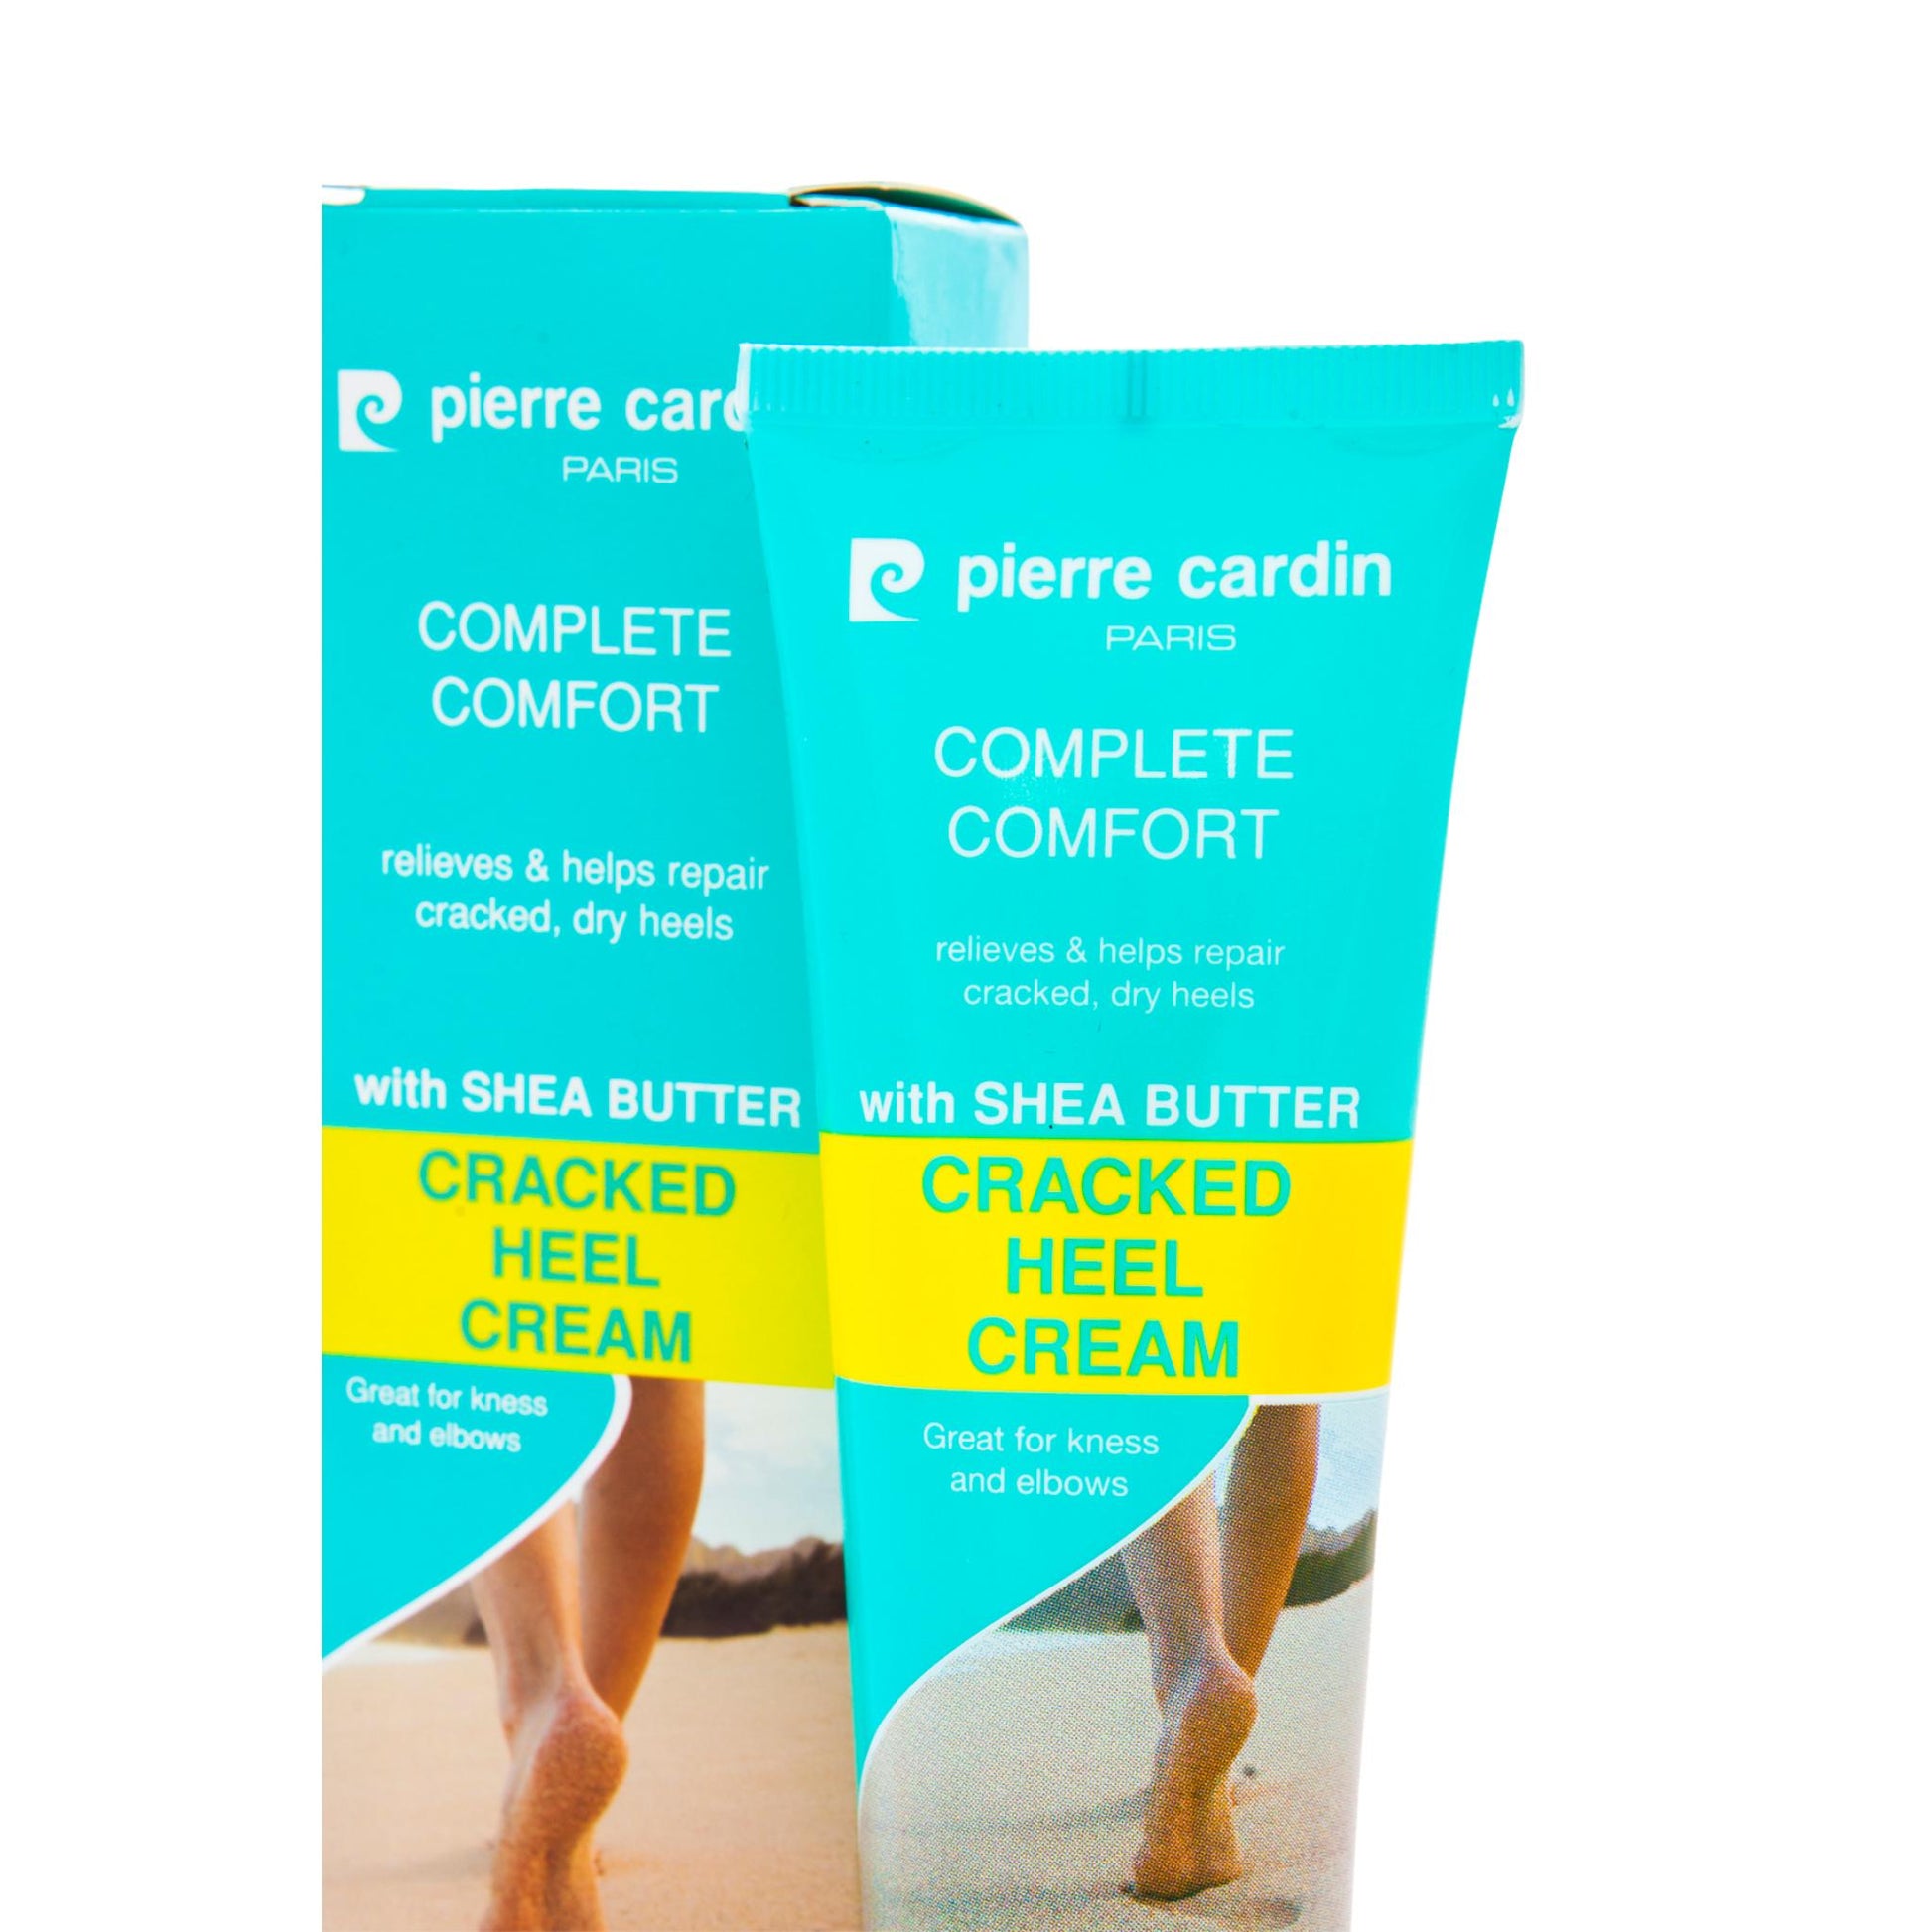 Pierre Cardin Paris Complete Comfort Cracked Heel Cream With Shea Butter 75ml